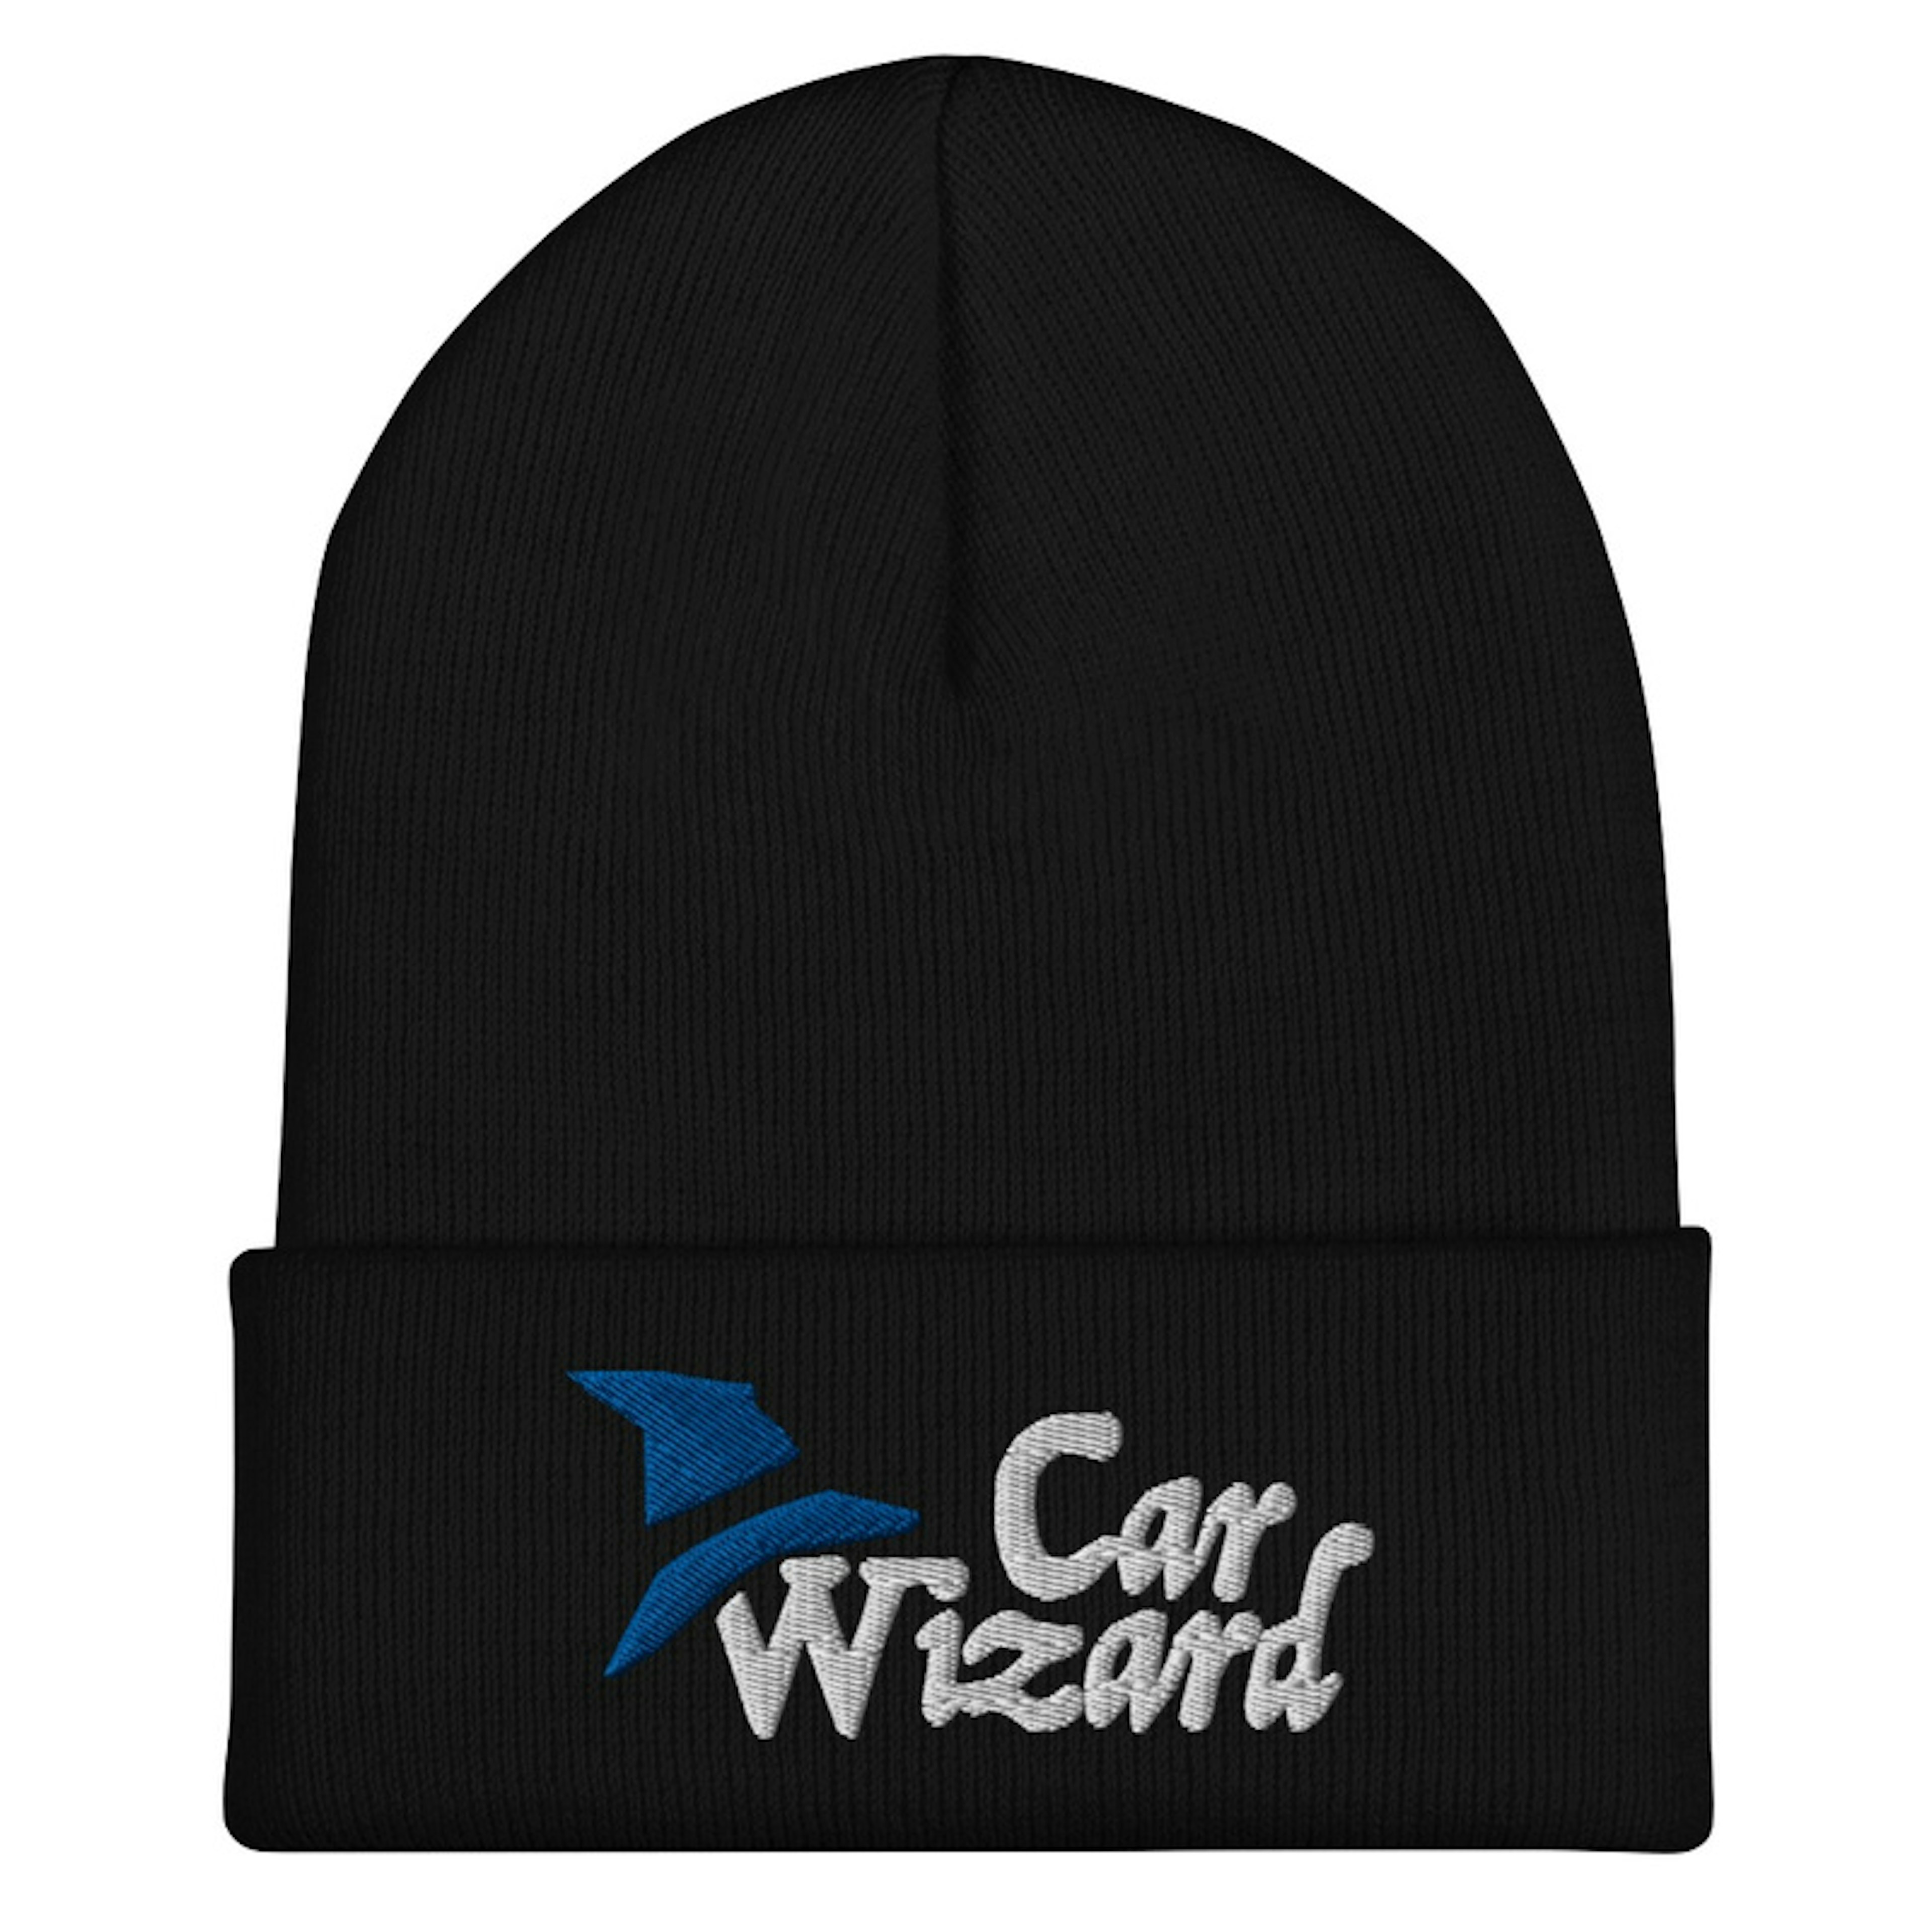 Car Wizard Stocking Hat